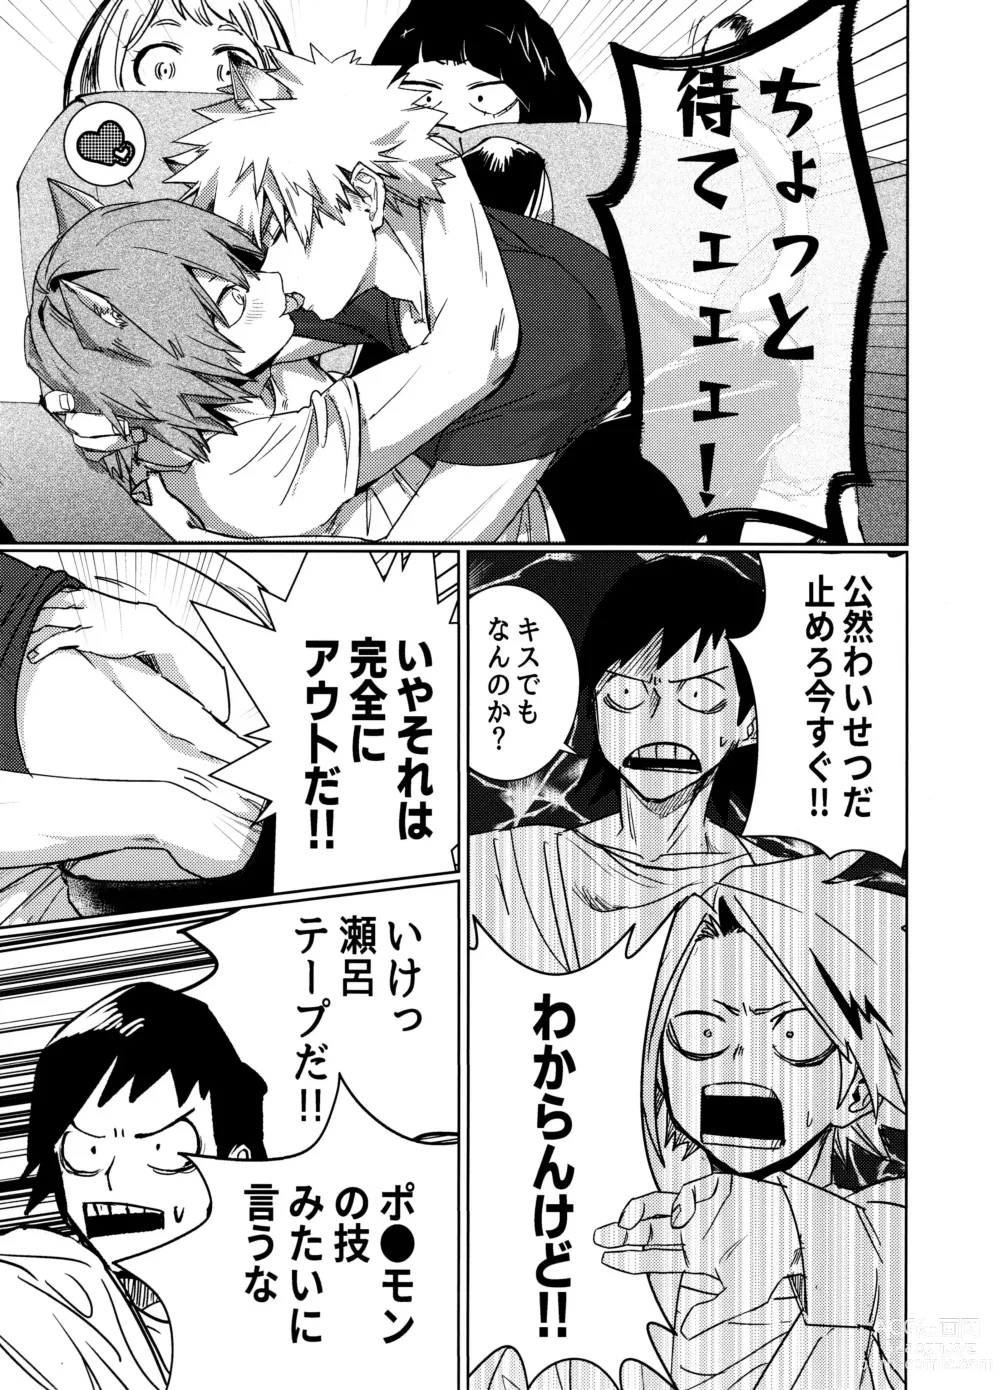 Page 11 of doujinshi Nekojiko Trigger